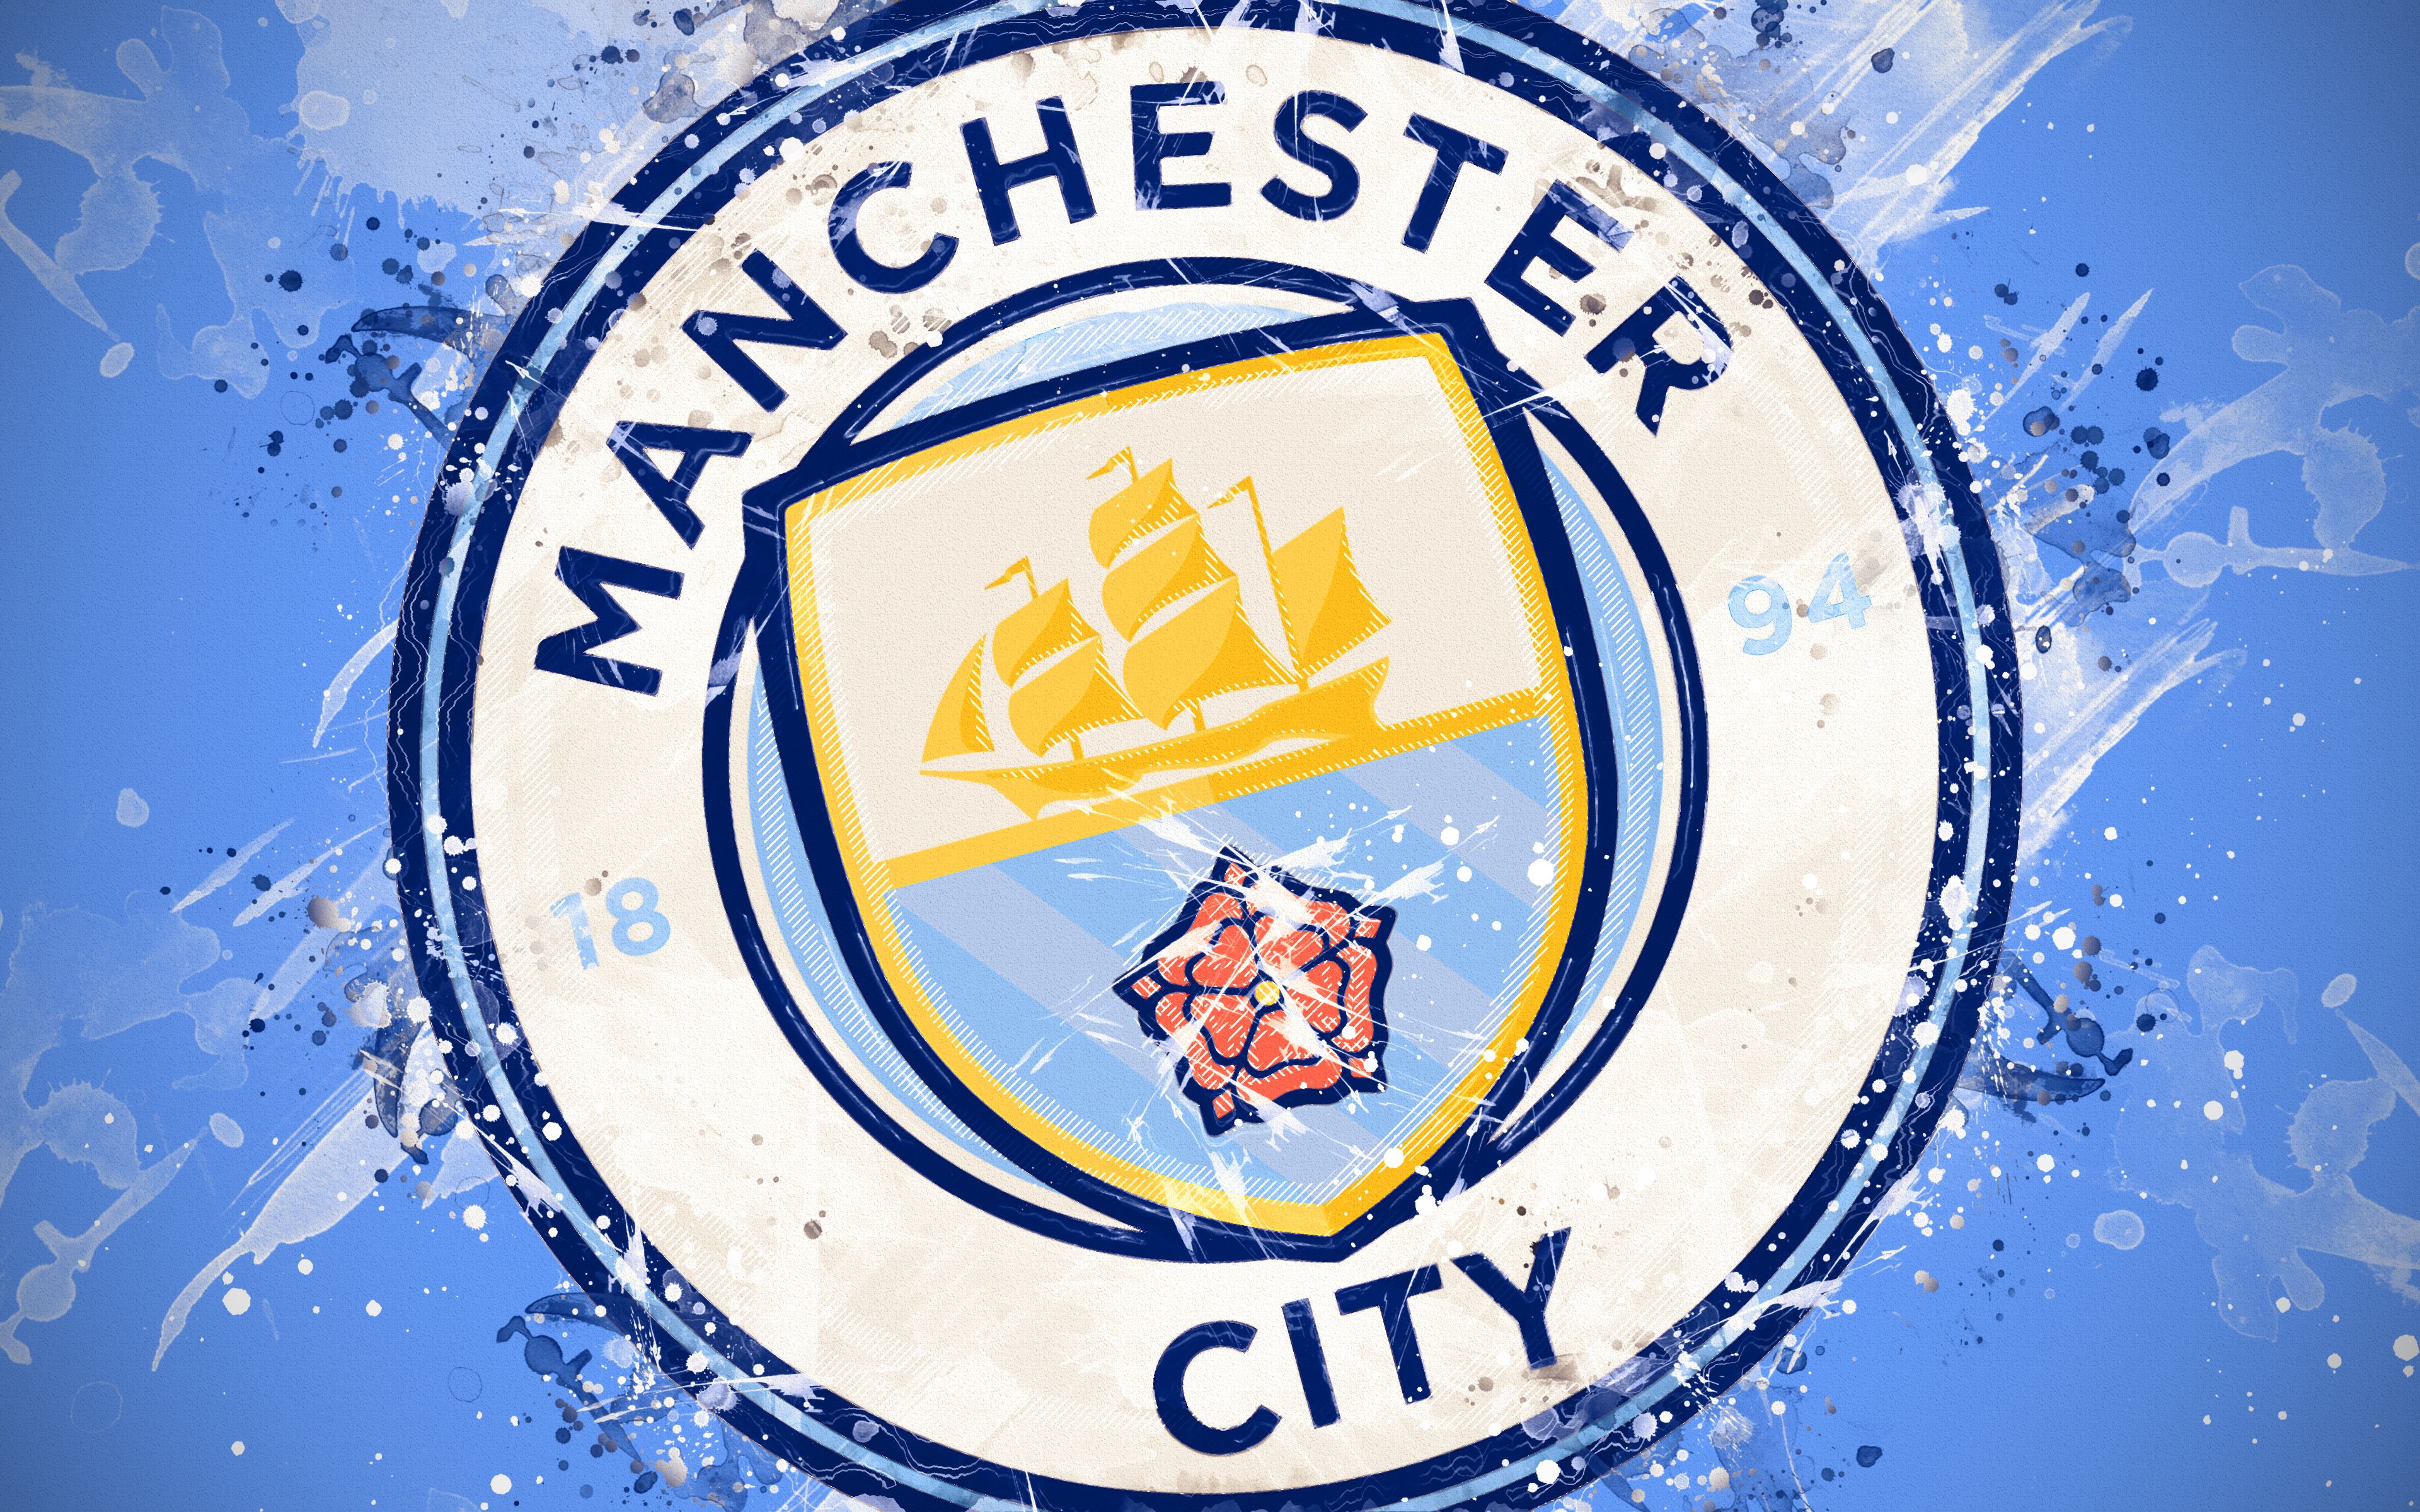 Manchester City Logos Wallpaper .wallpaperafari.com